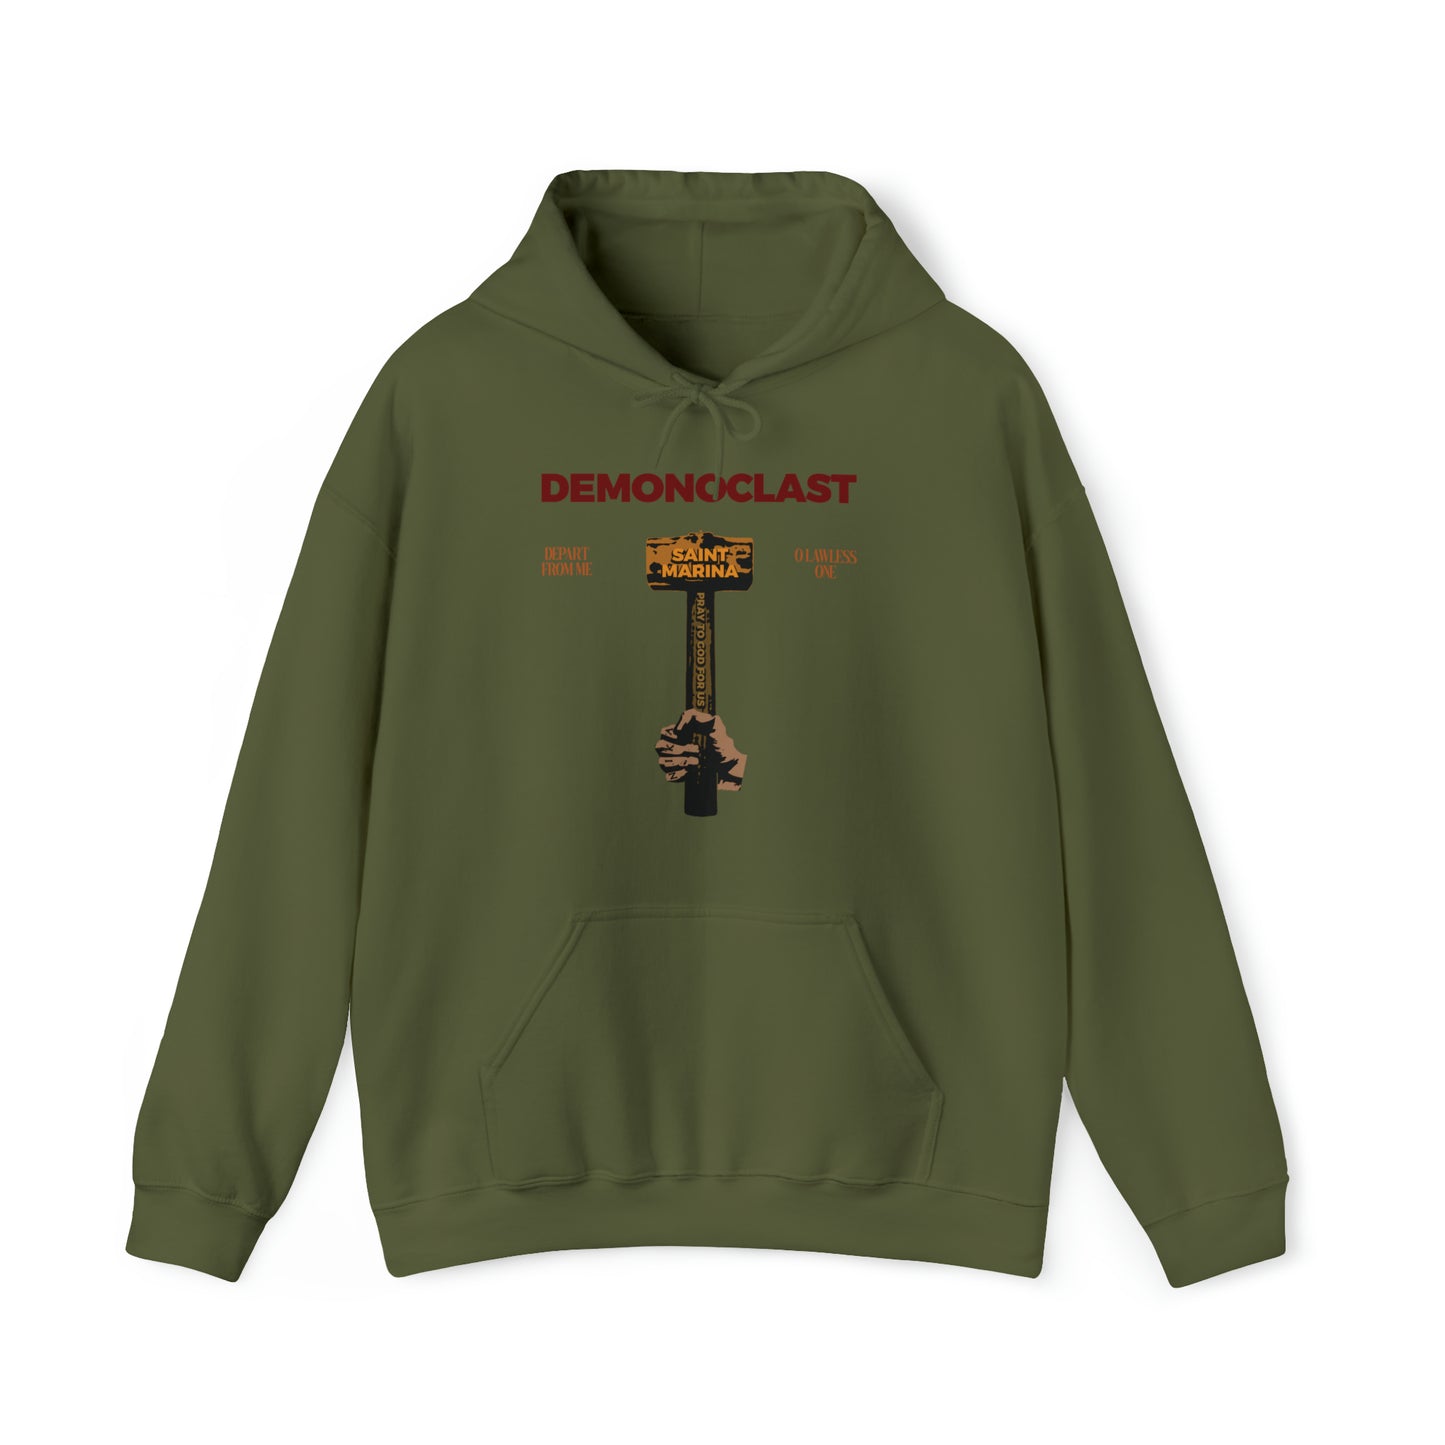 Demonoclast No. 1 (St. Marina's Hammer)  | Orthodox Christian Hoodie / Hooded Sweatshirt